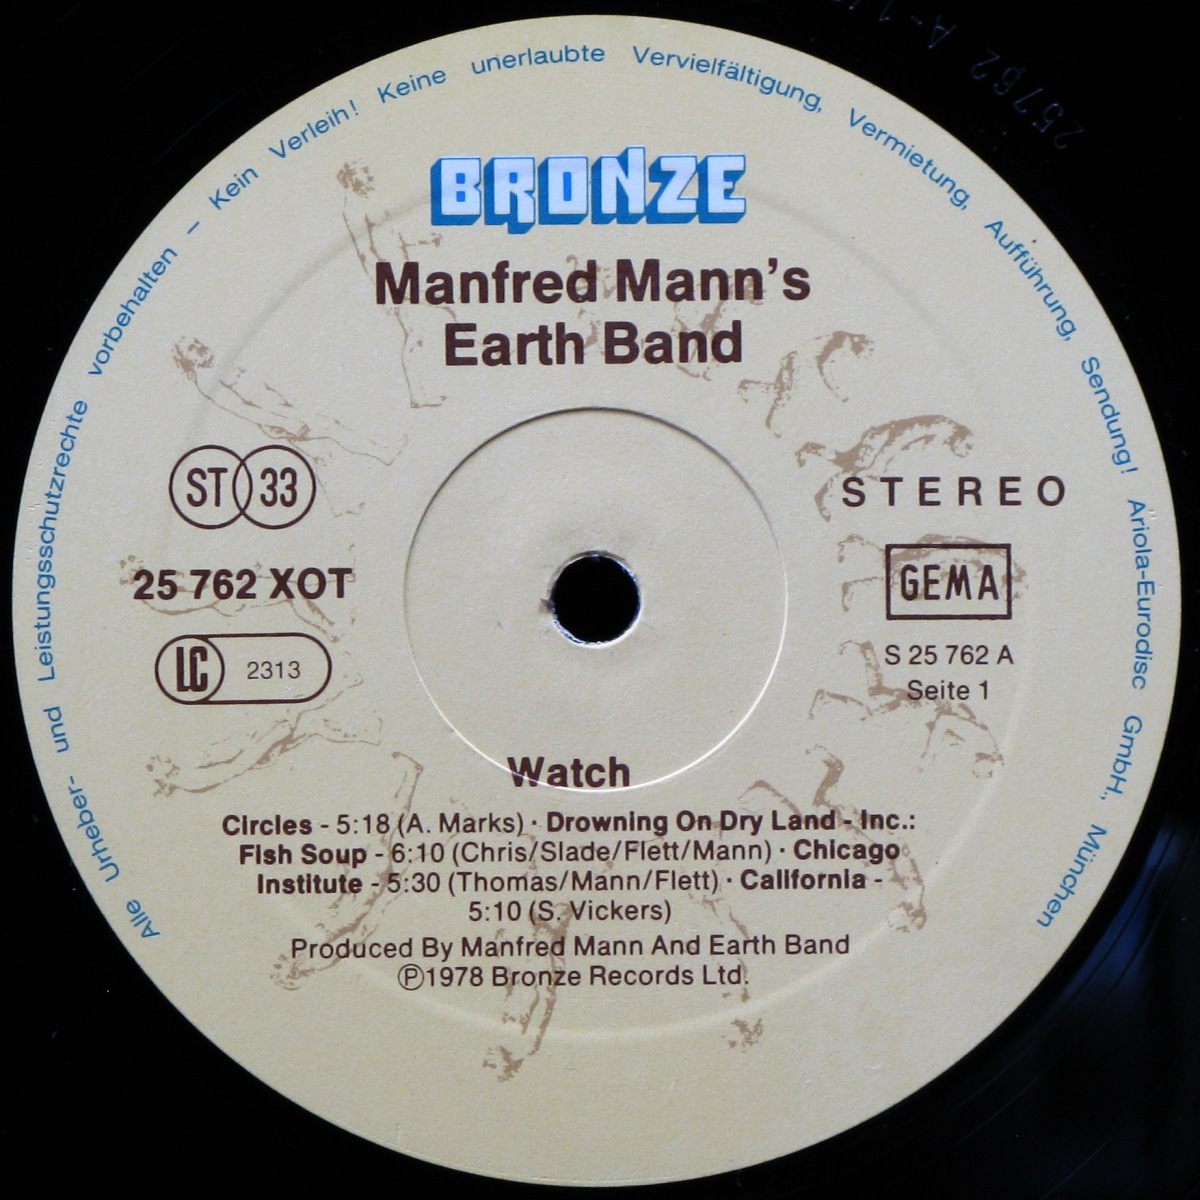 LP Manfred Mann's Earth Band — Roaring Silence фото 2